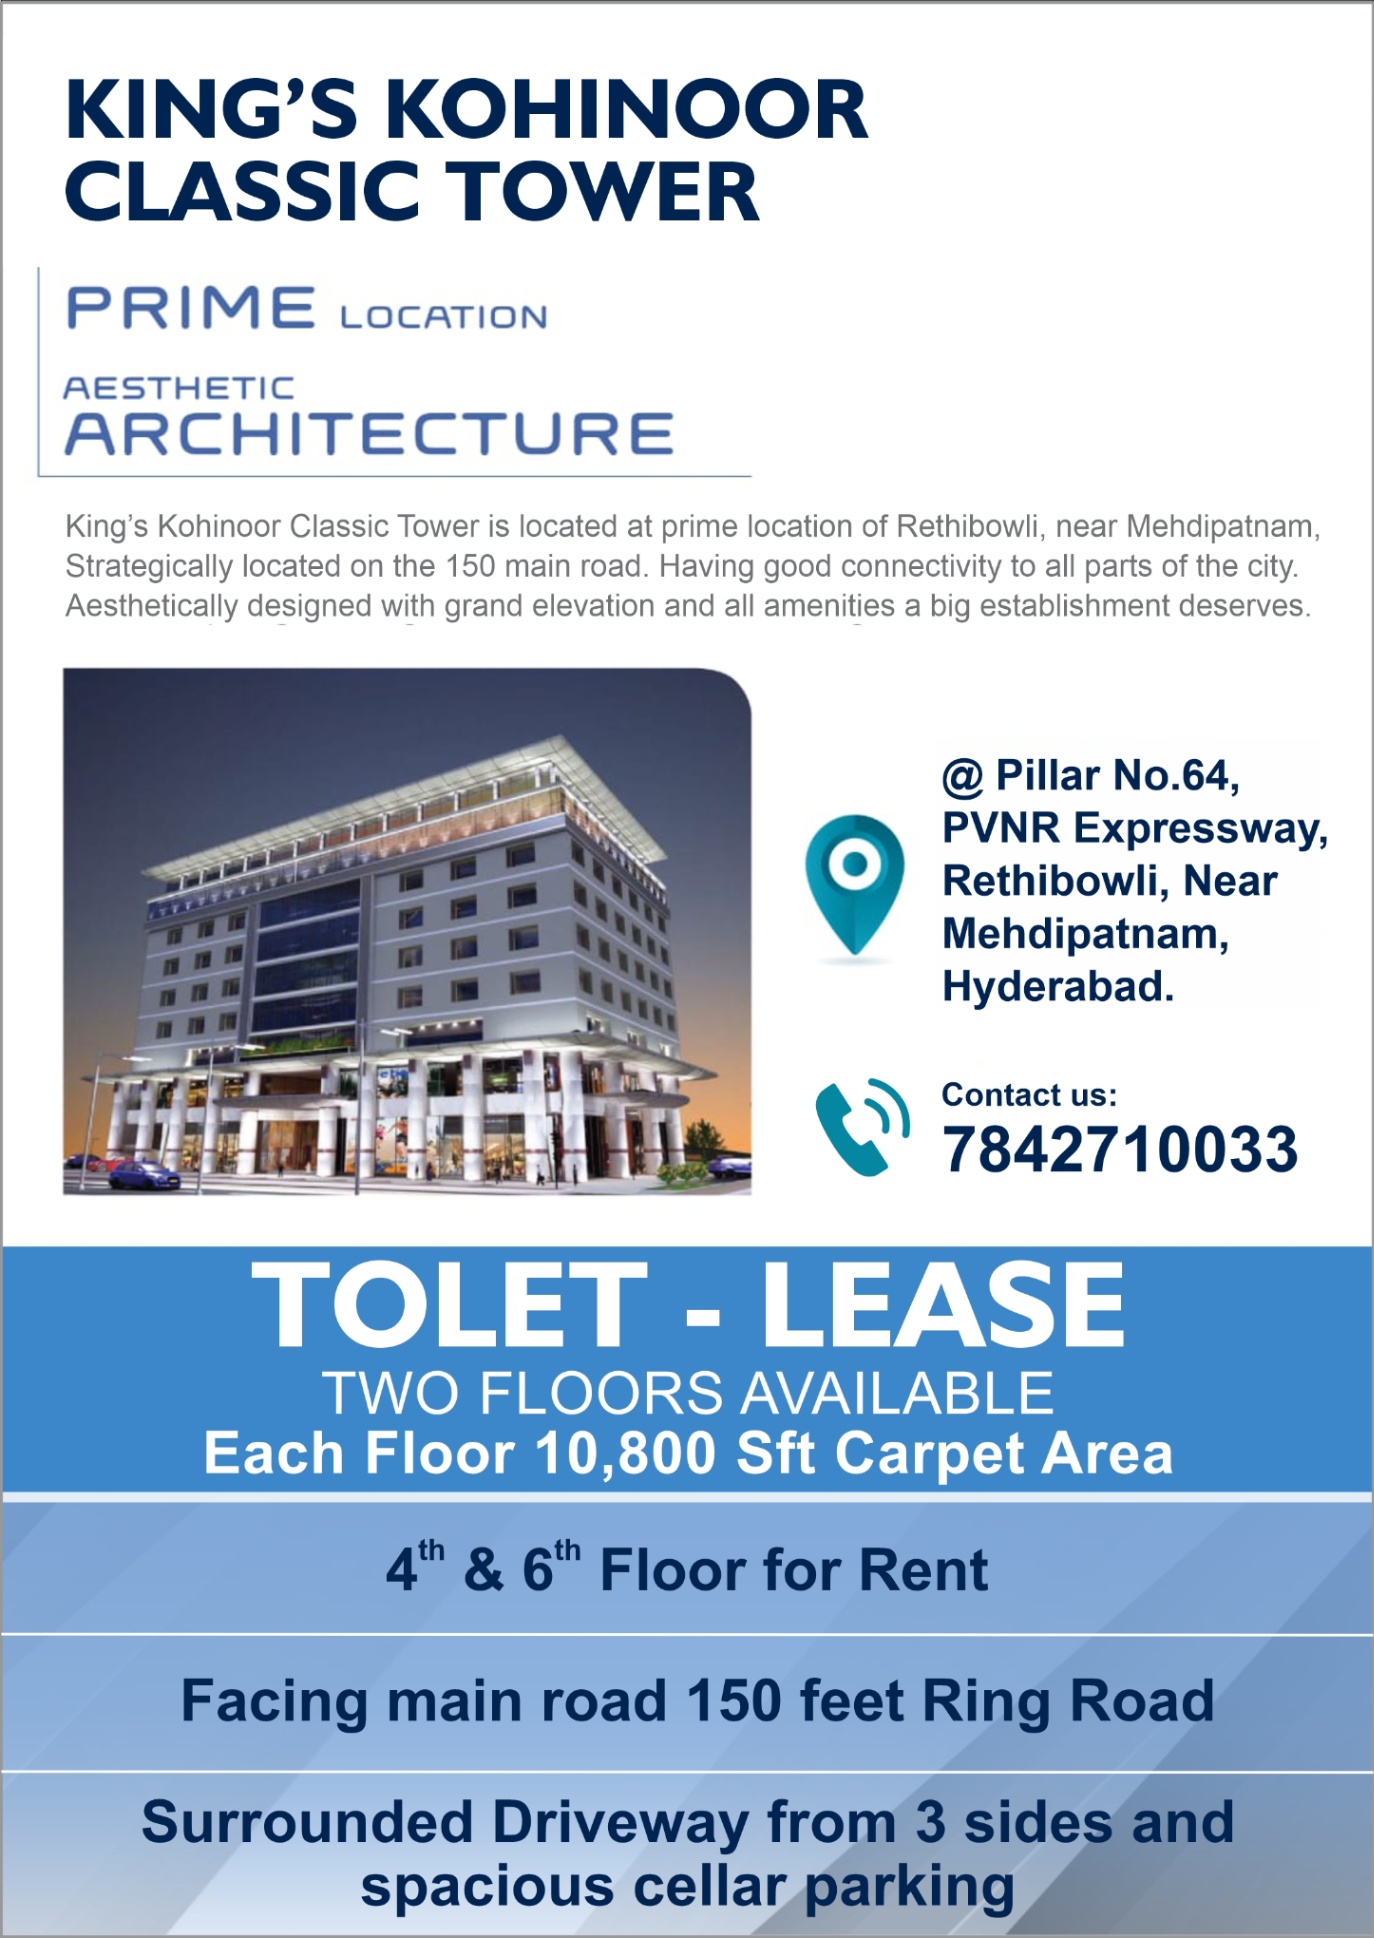 Rent Office/ Shop, 10800 sq ft carpet area for rent @Hyderabad